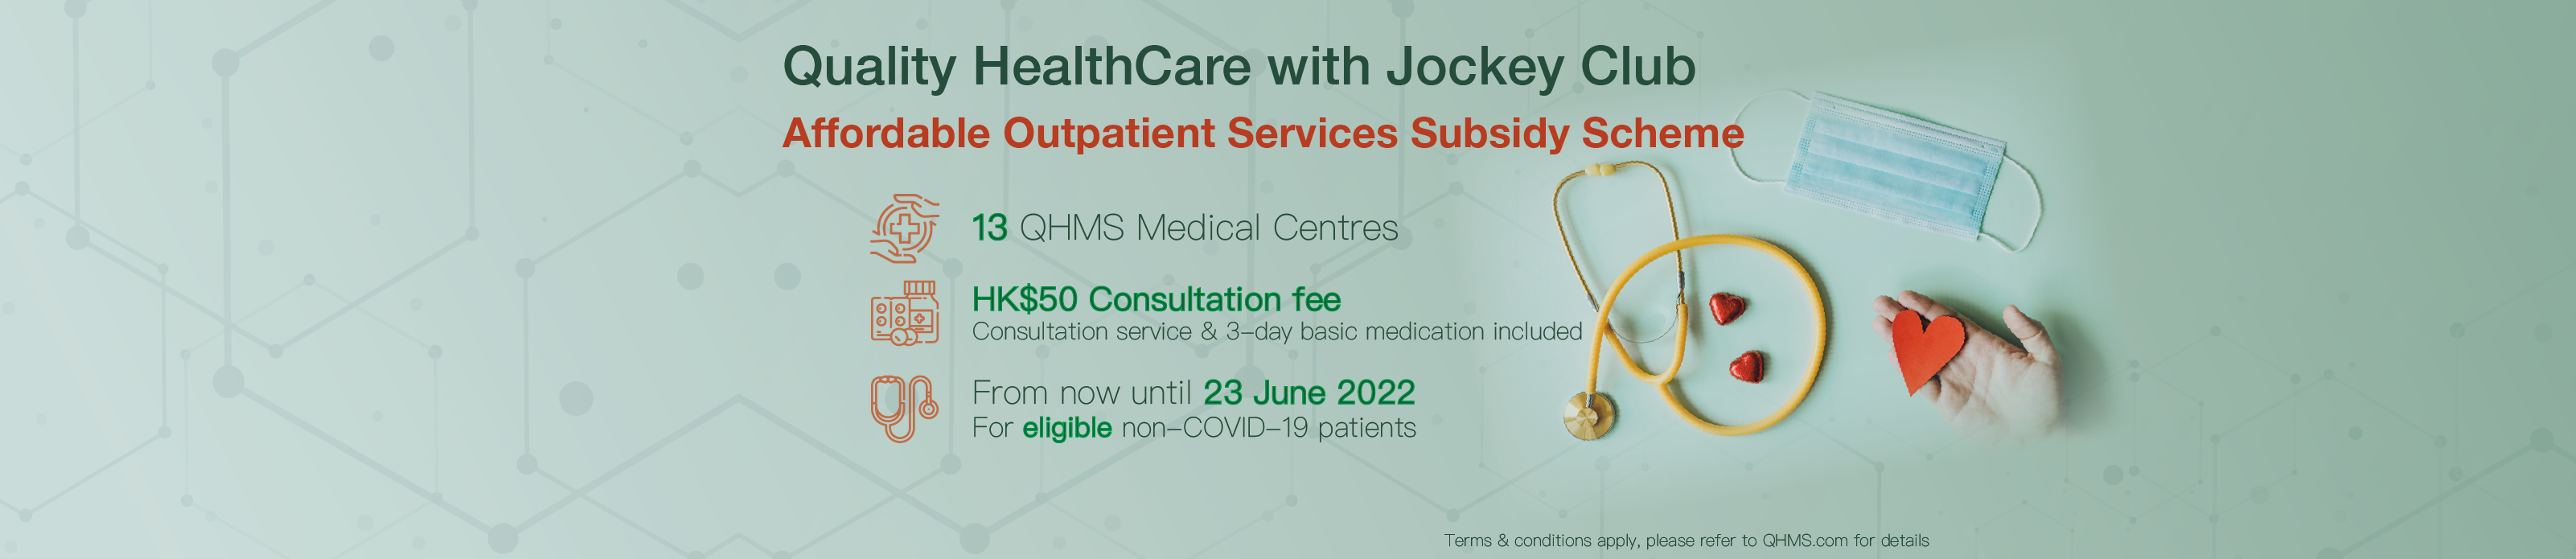 HKJC Affordable Outpatient Services Subsidy Scheme EN Banner 2022